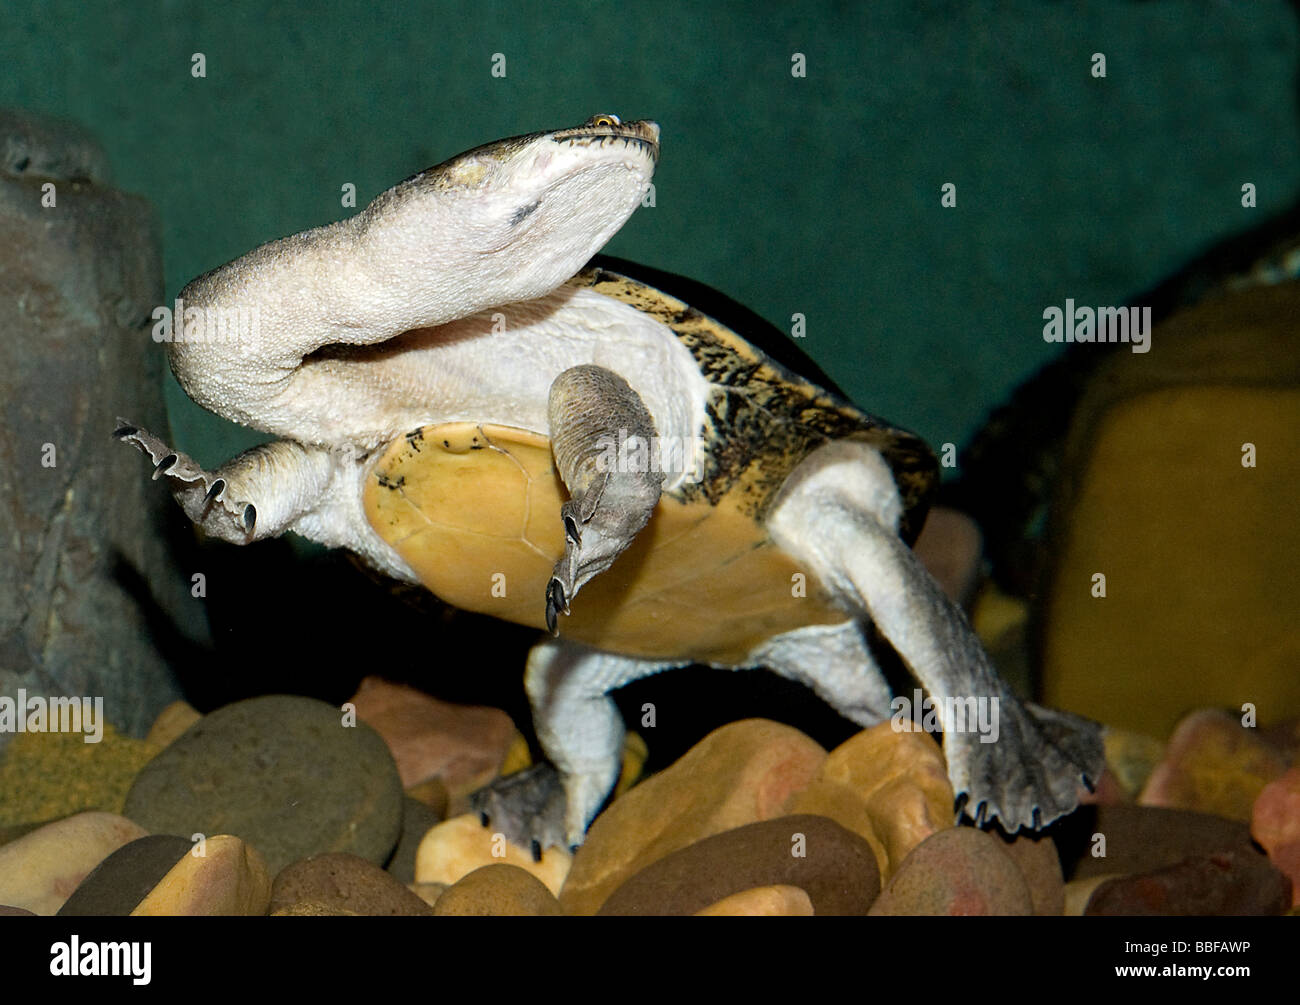 Sandstone longneck or snakeneck turtle Australia Stock Photo